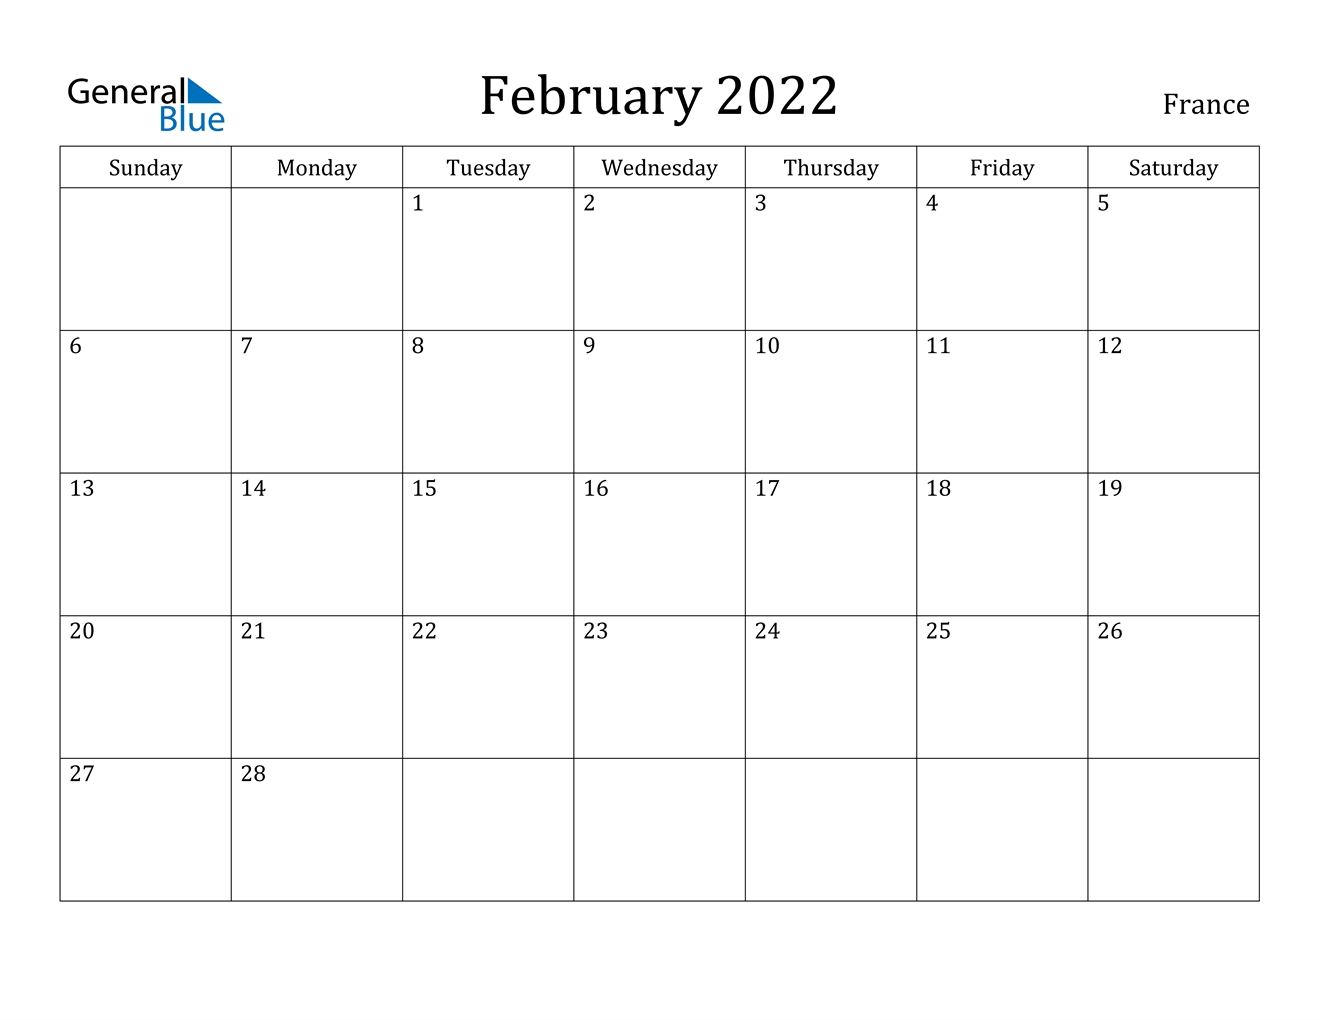 February 2022 Calendar - France